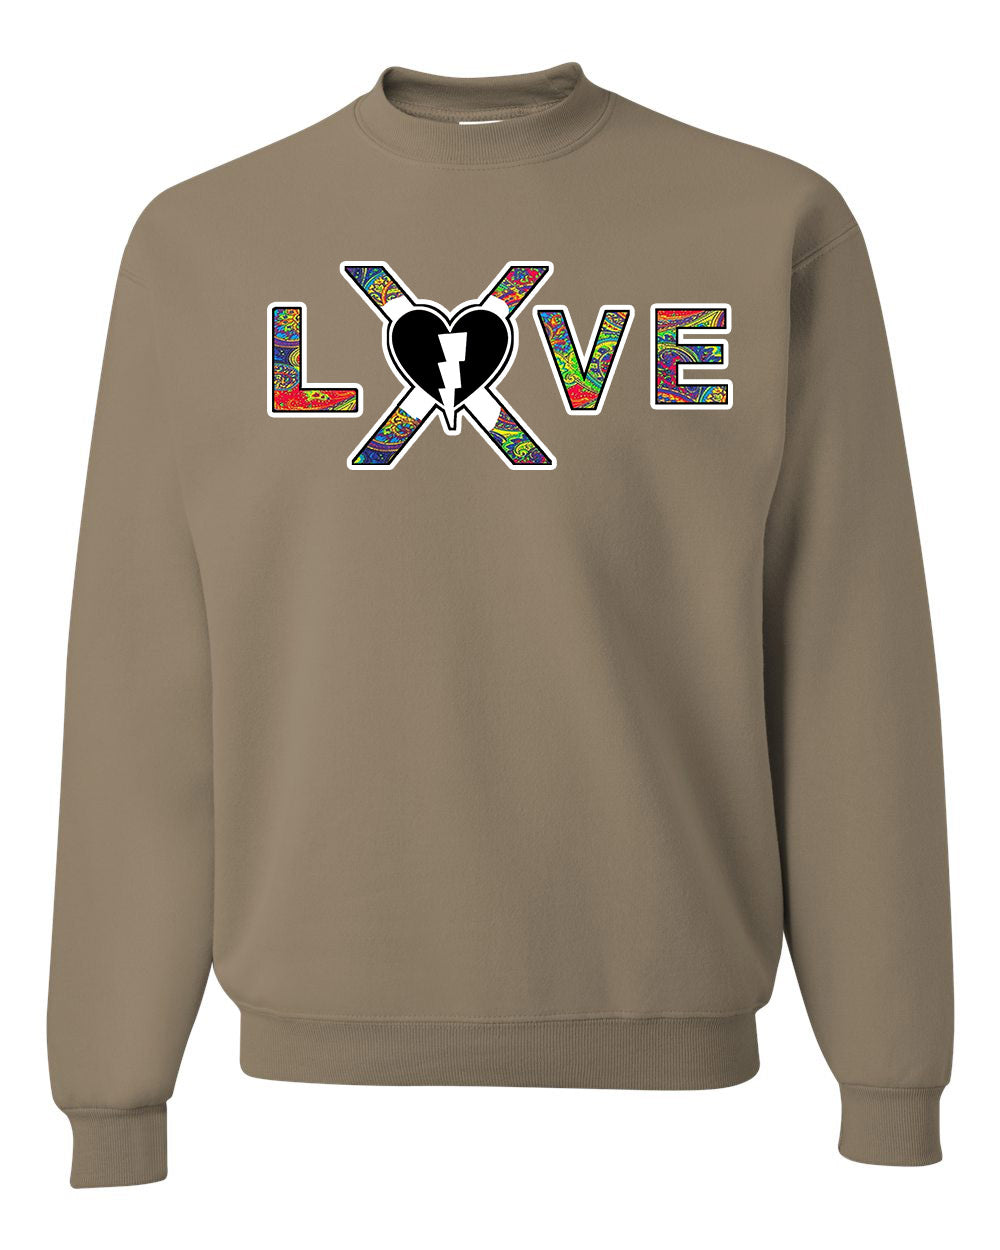 Live X Love Sweatshirt (Prism)